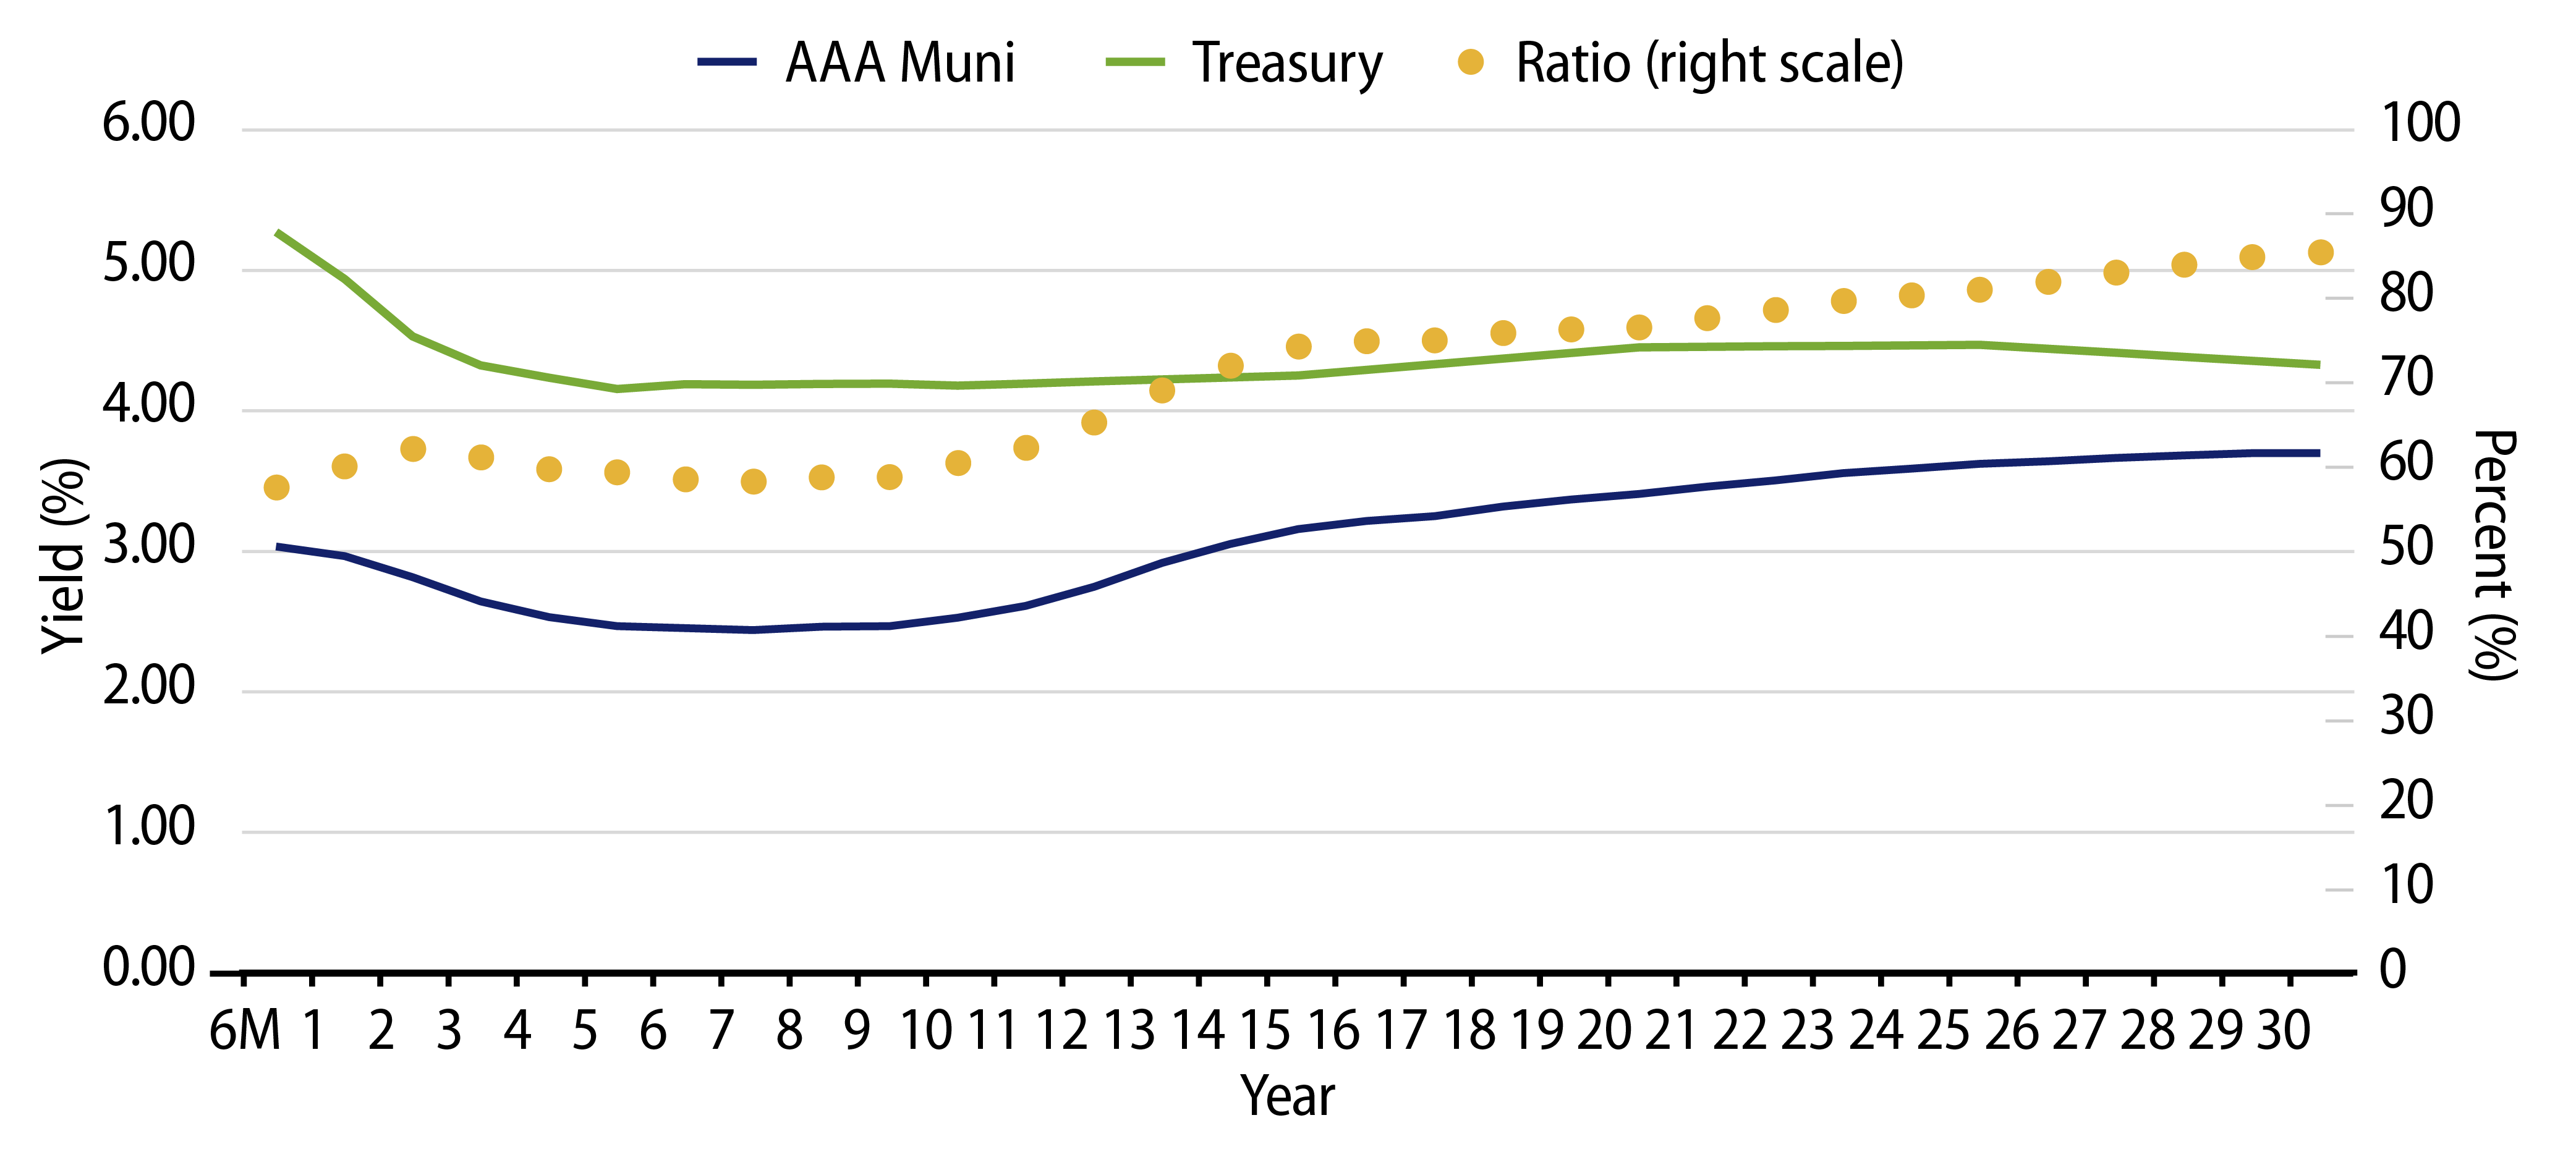  Explore AAA Municipal vs. Treasury Yield Curves